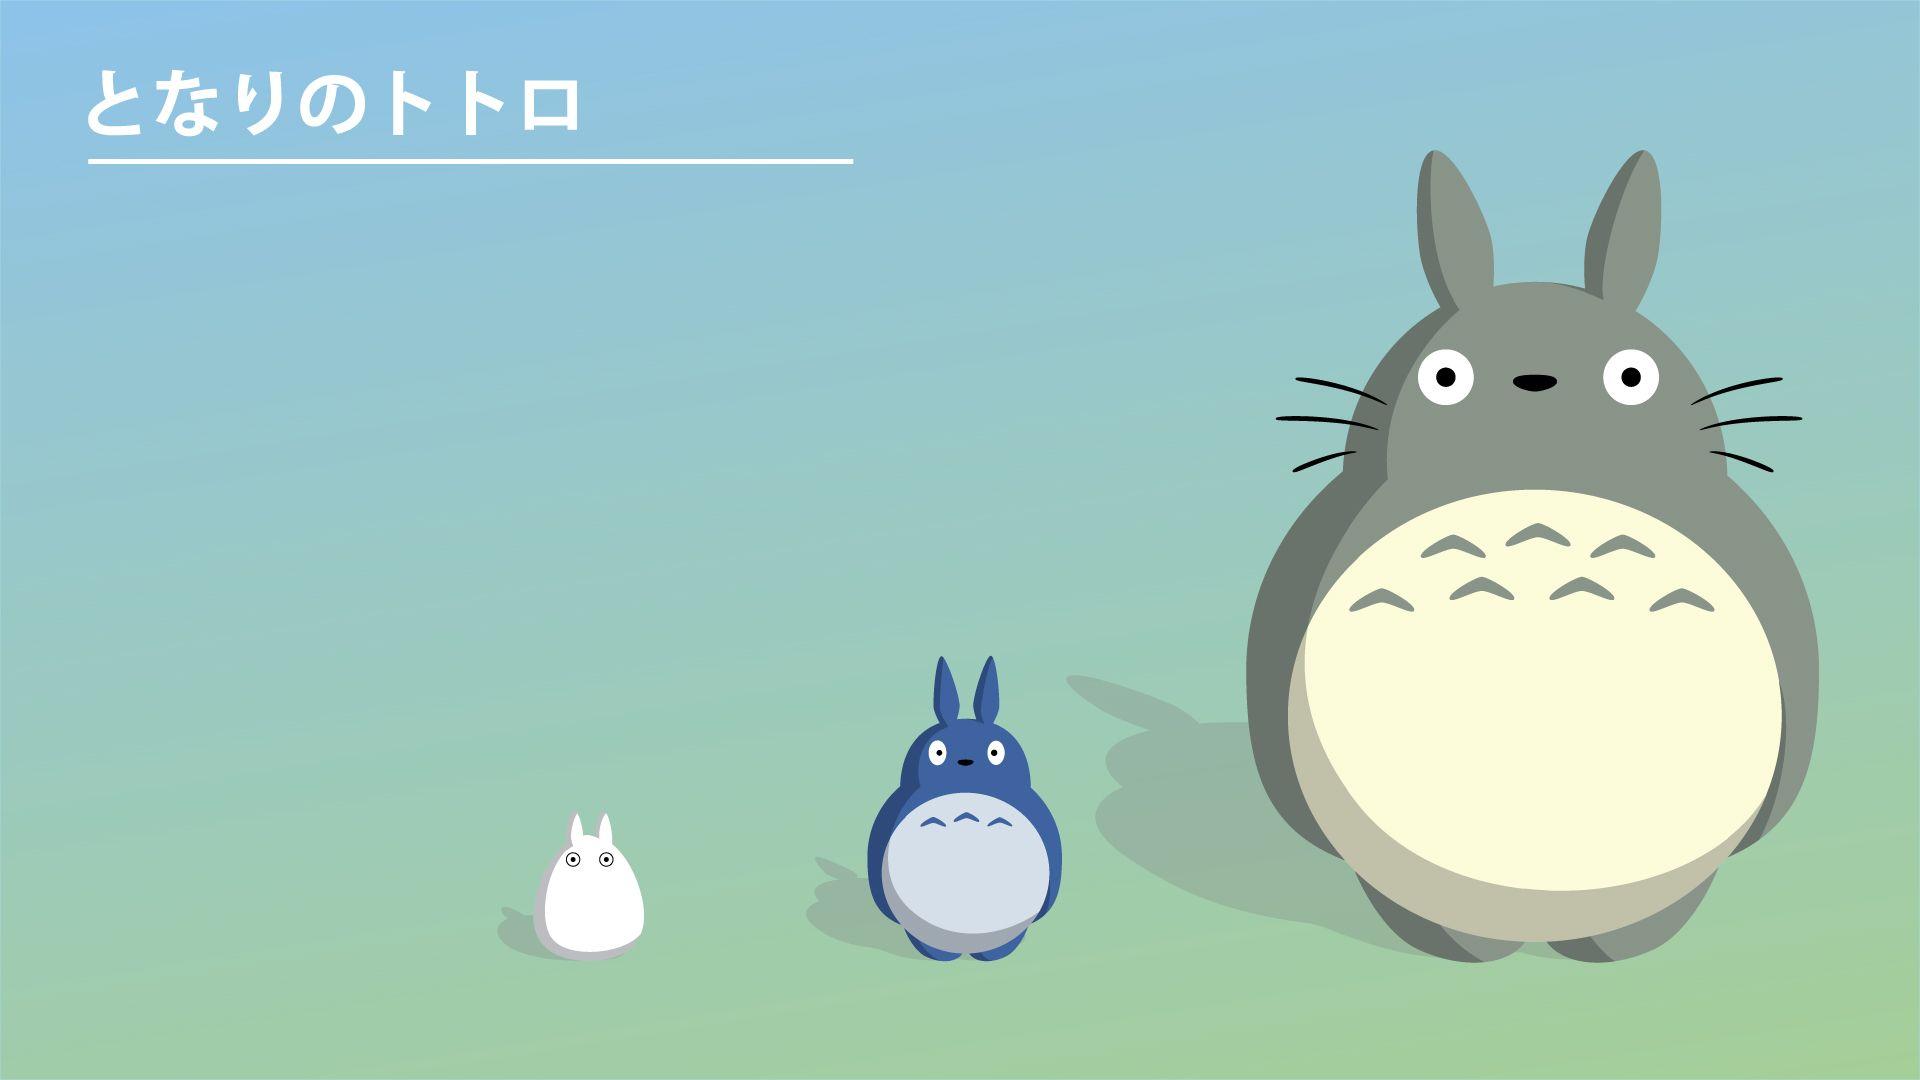 My Neighbor Totoro hình nền My Neighbor Totoro hình nền 43551354 fanpop